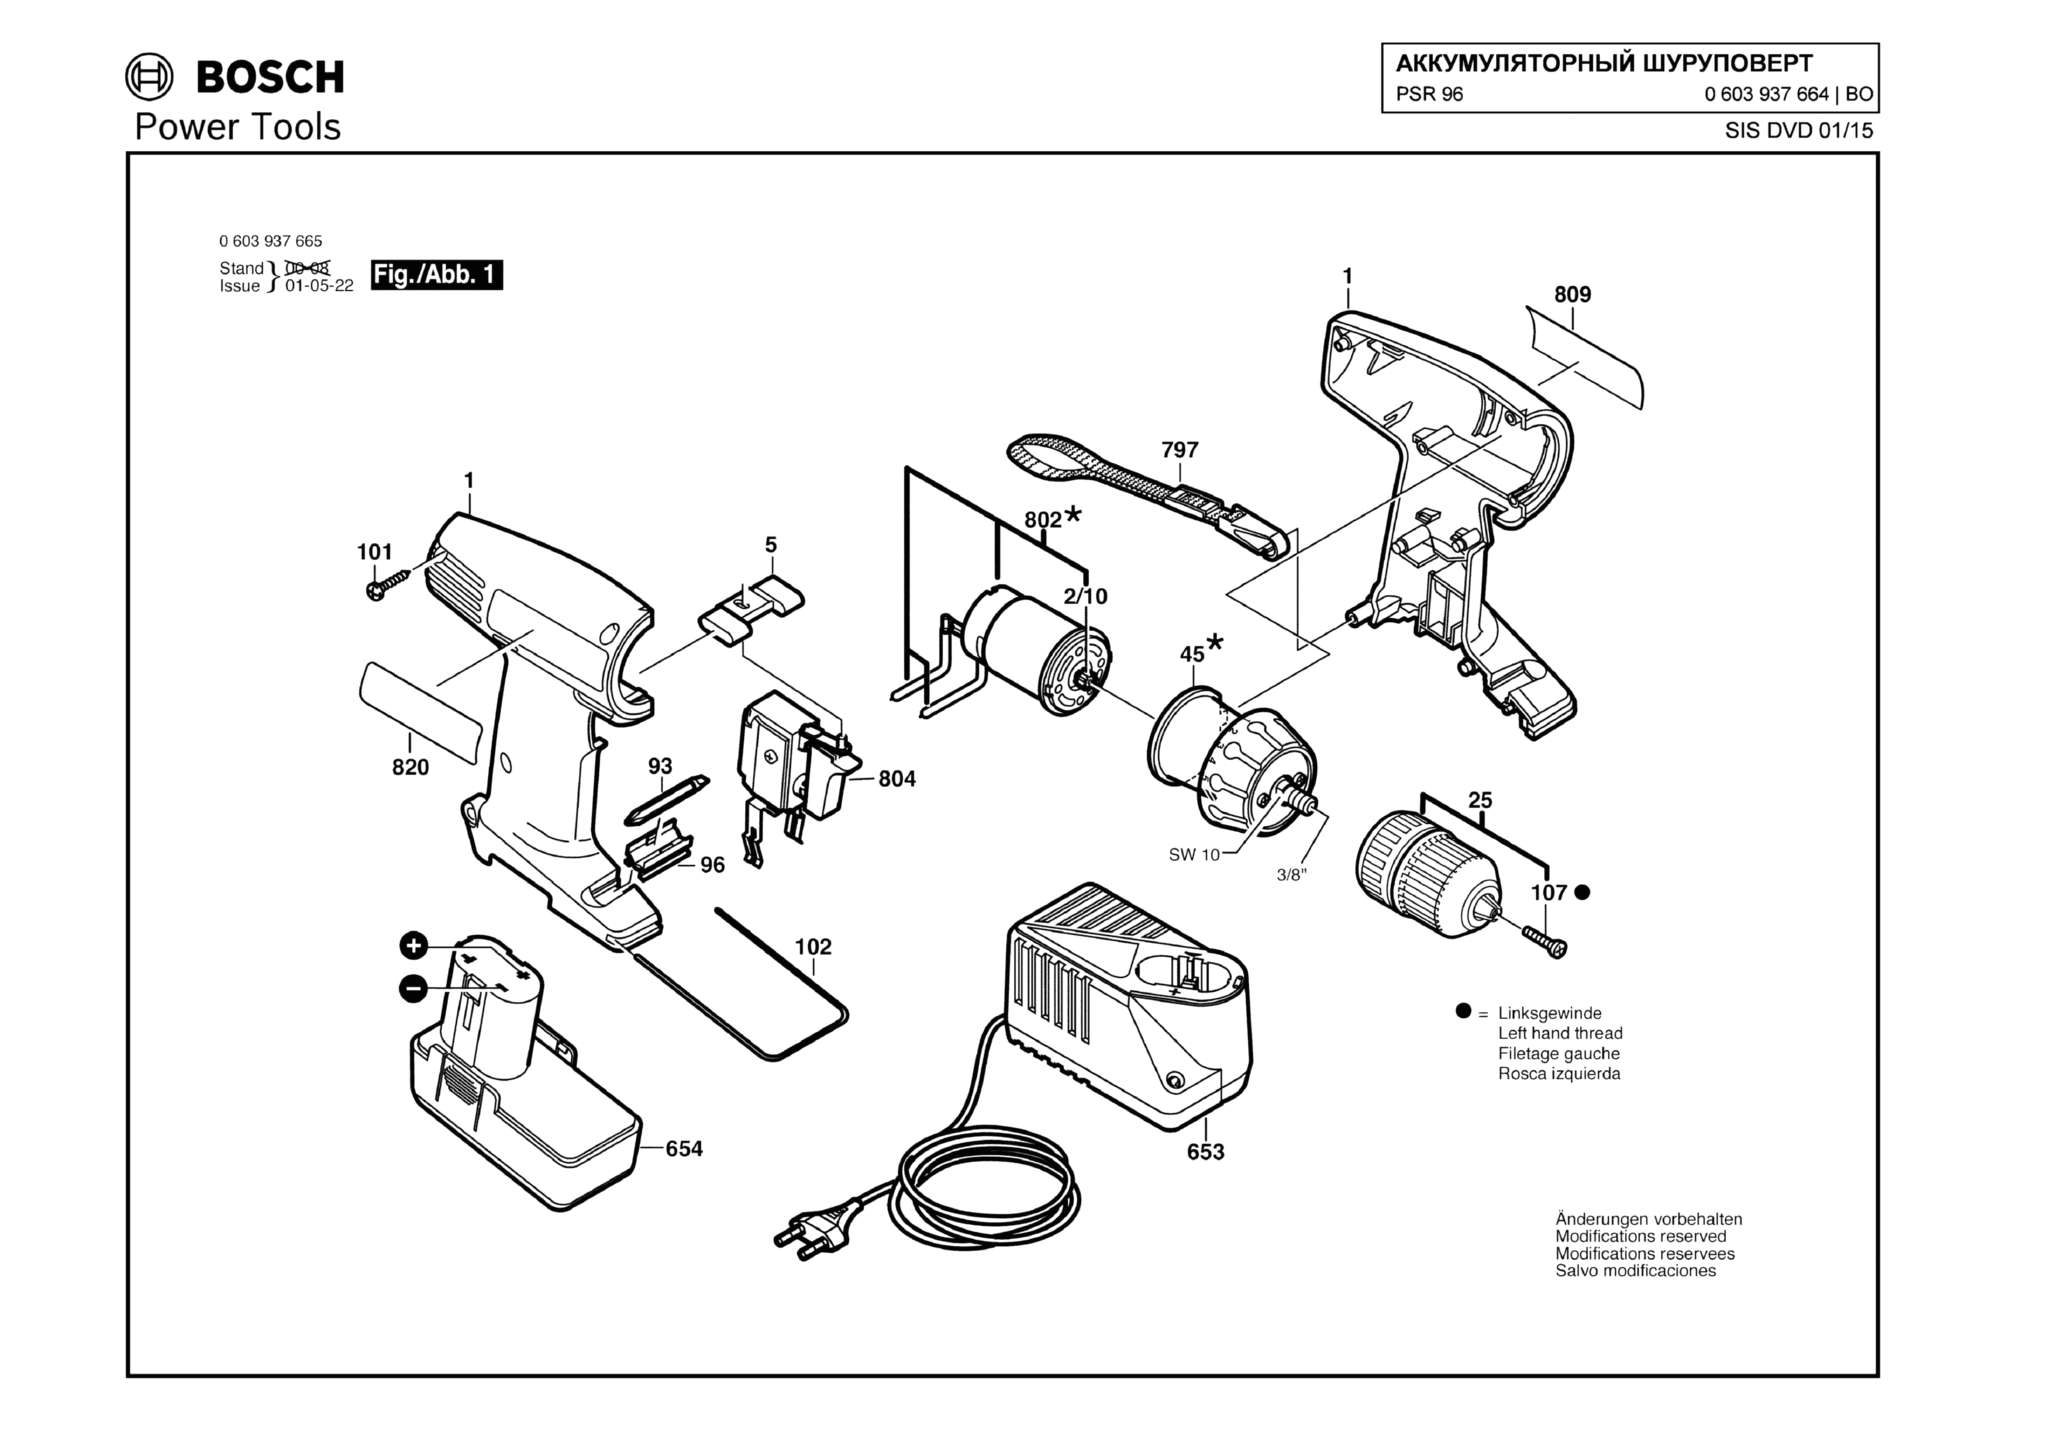 Запчасти, схема и деталировка Bosch PSR 96 (ТИП 0603937664)